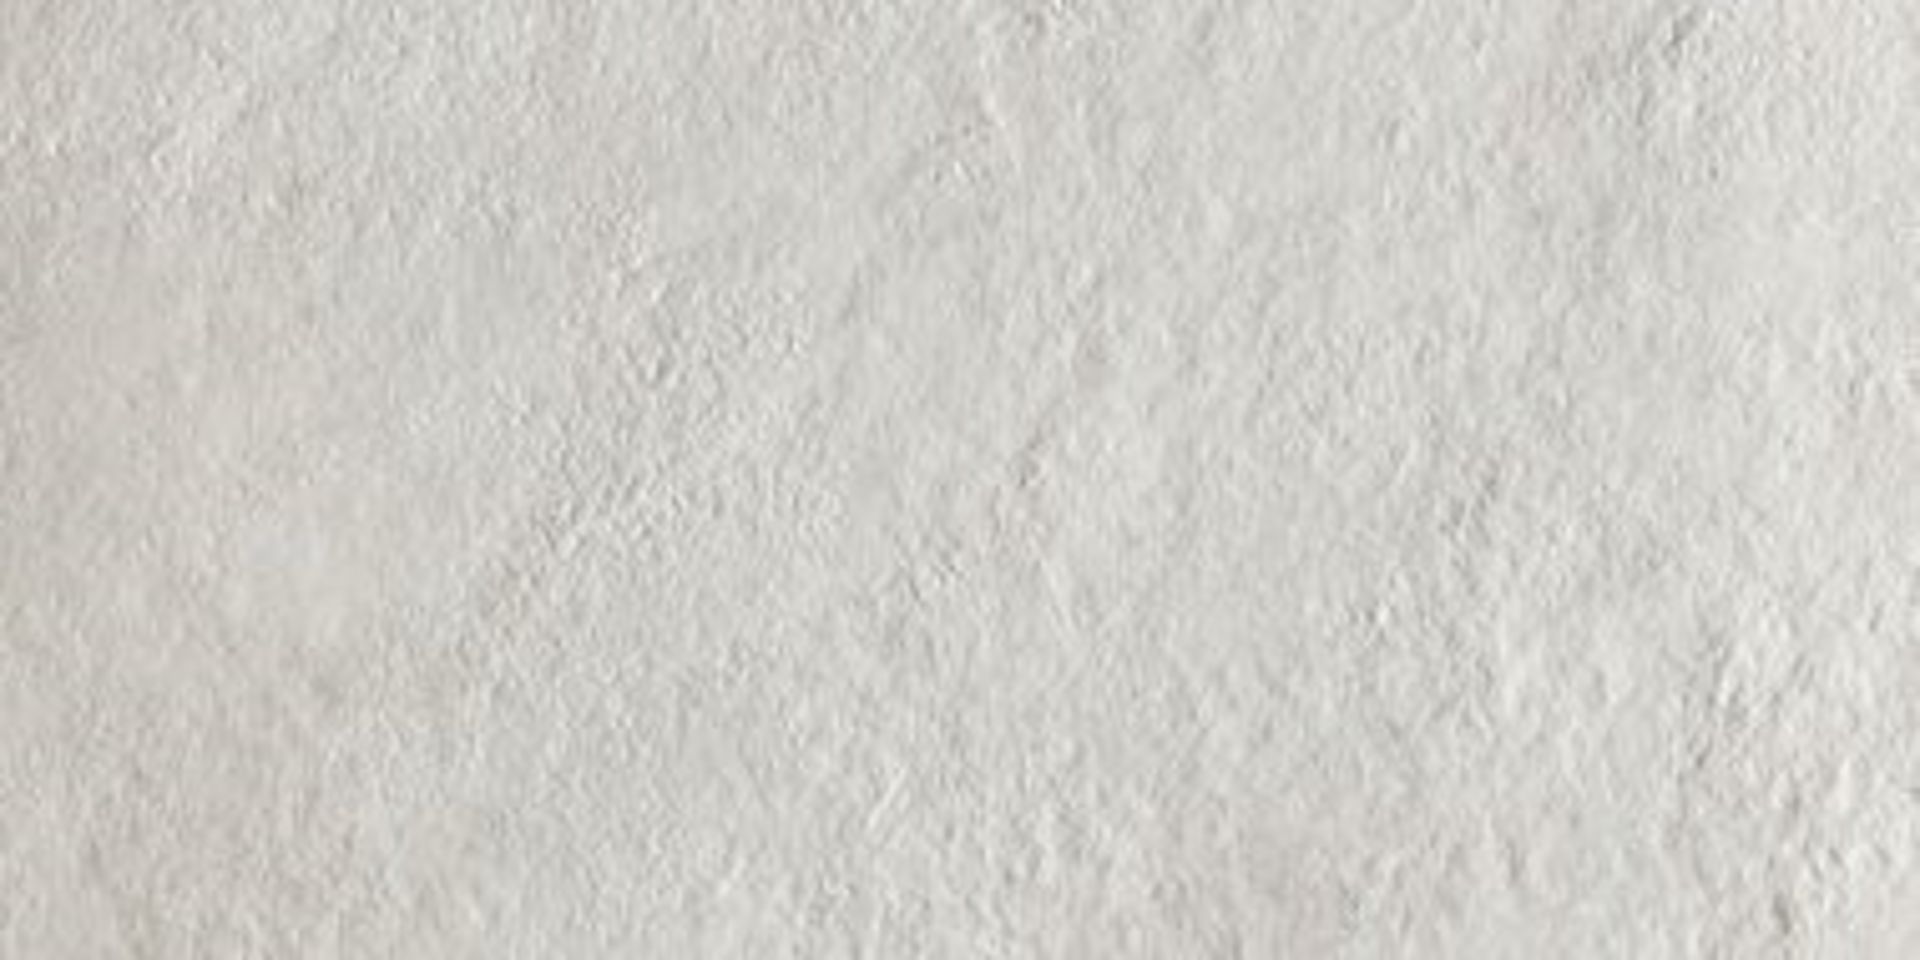 12 x Boxes of RAK Porcelain Floor or Wall Tiles - Concrete Sand Design in Beige - 30 x 60